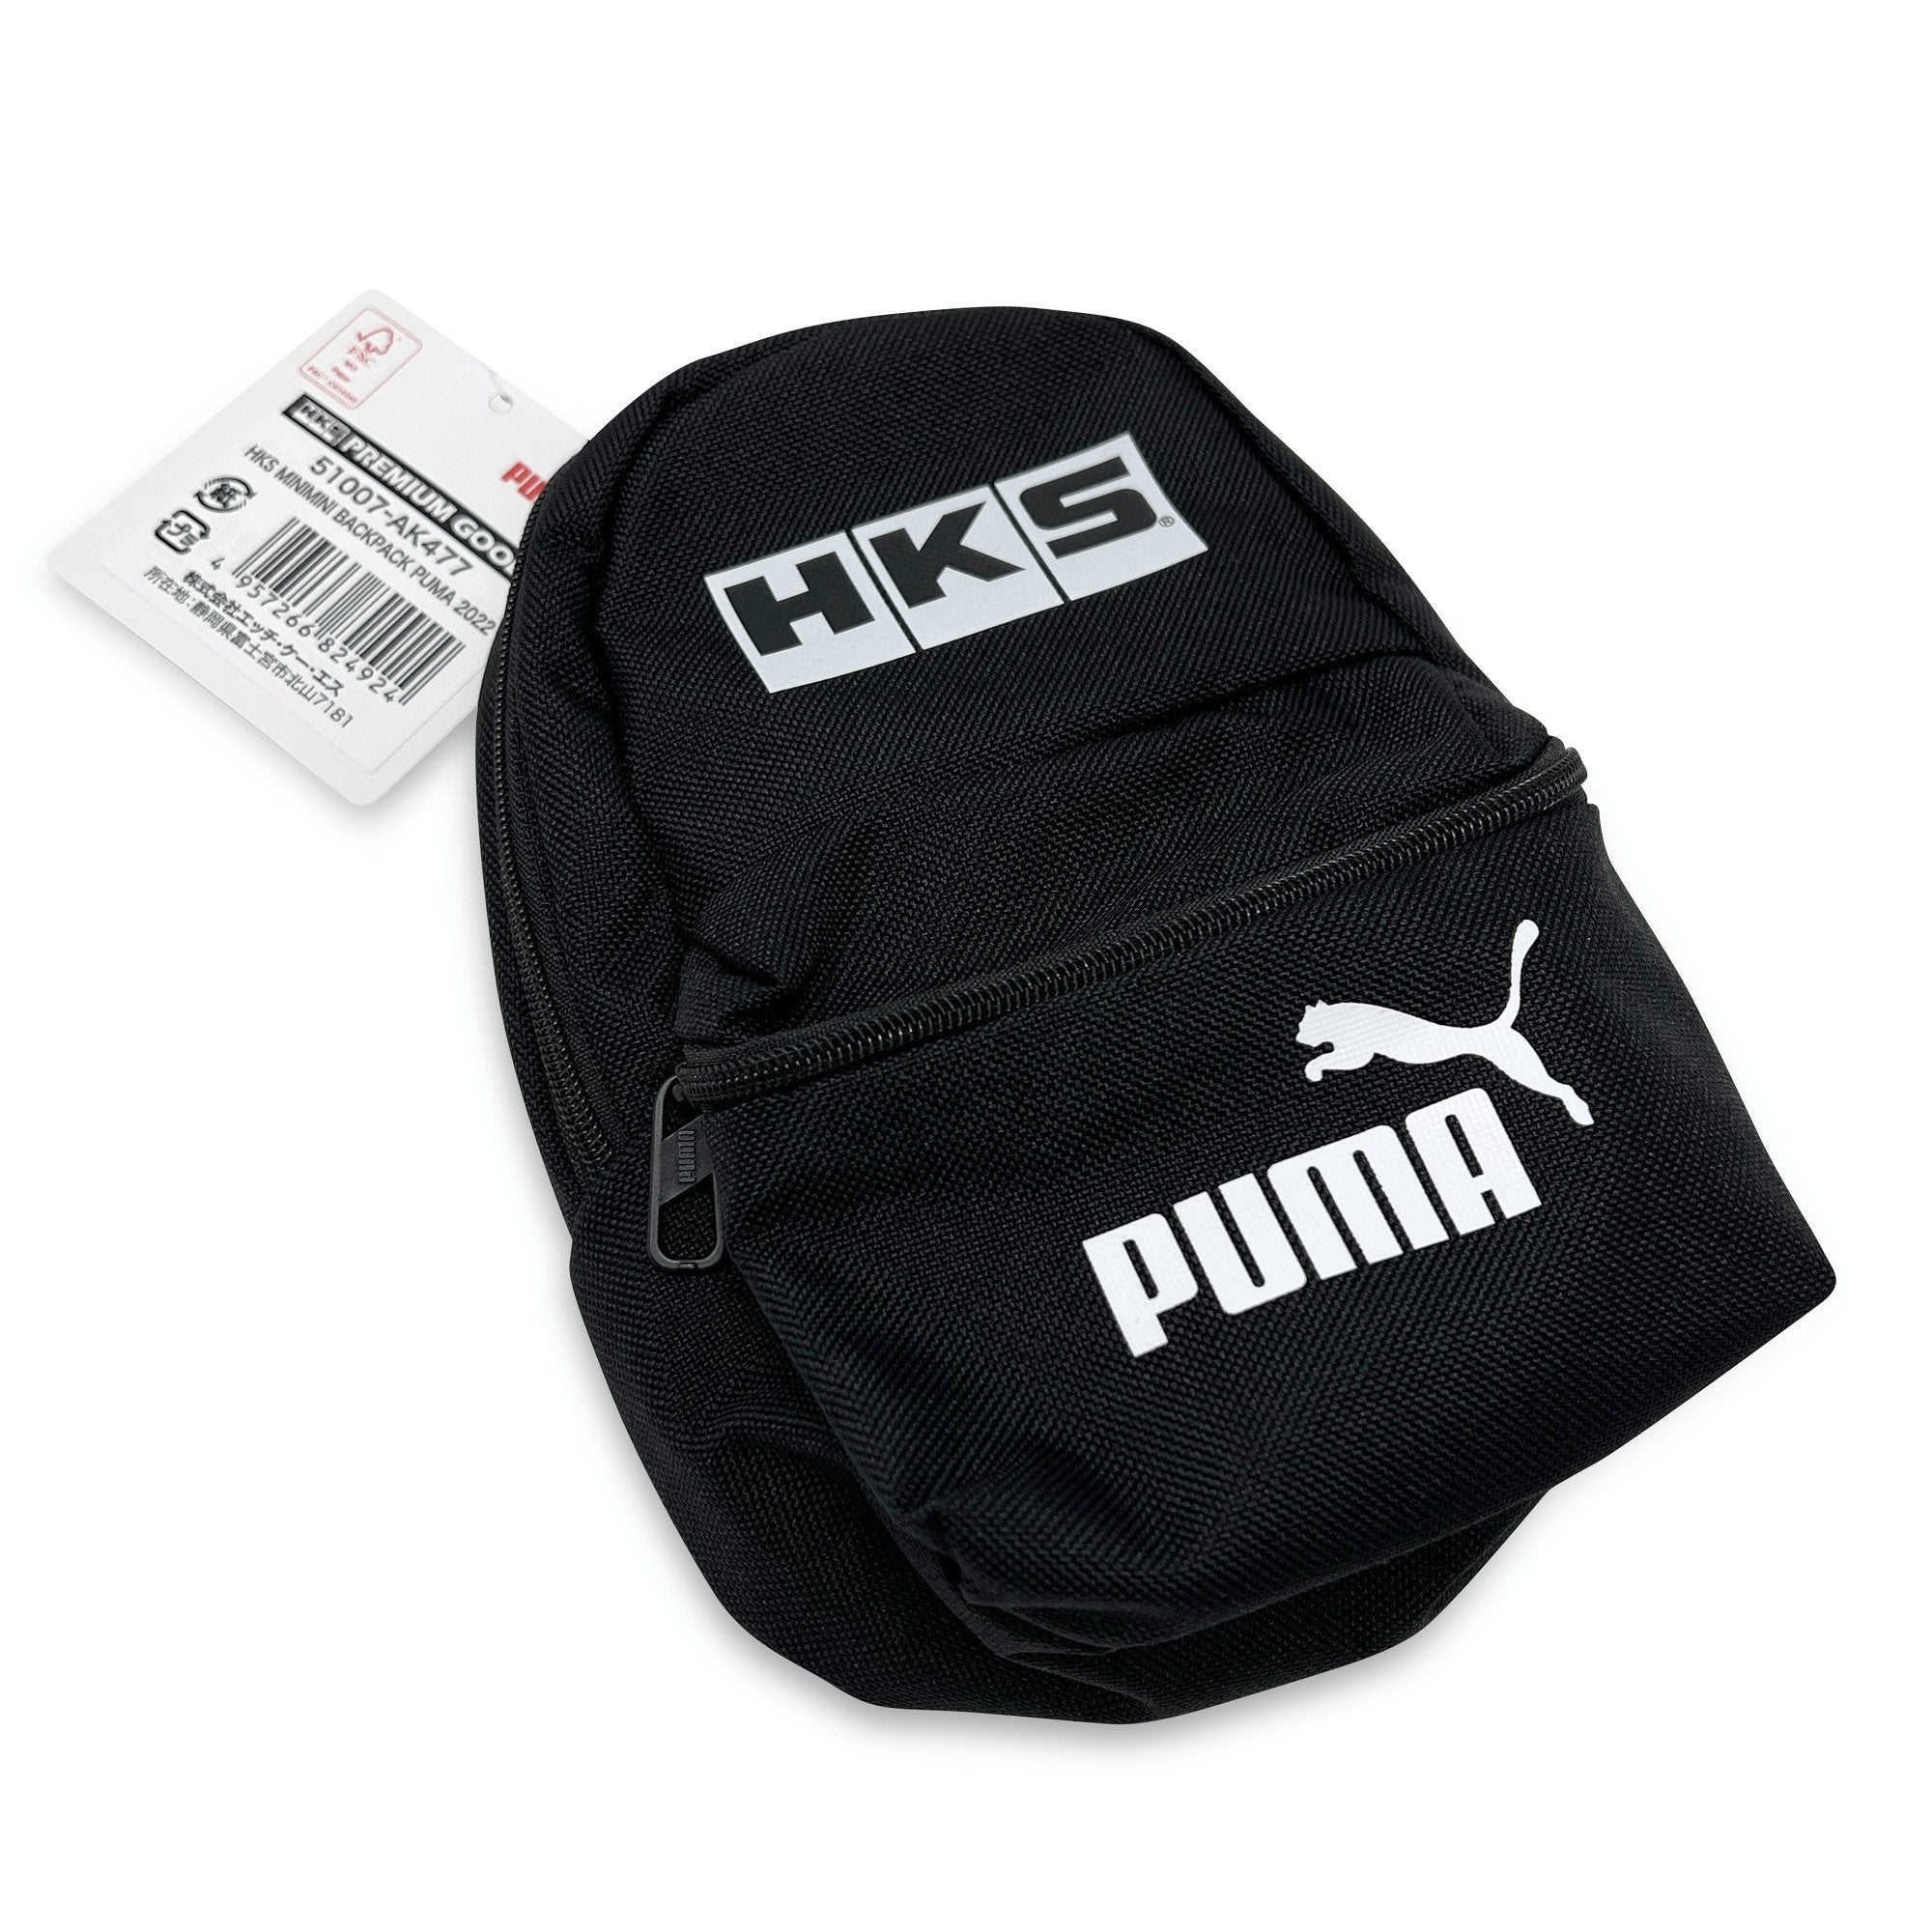 Buy Black Backpacks for Men by Puma Online | Ajio.com